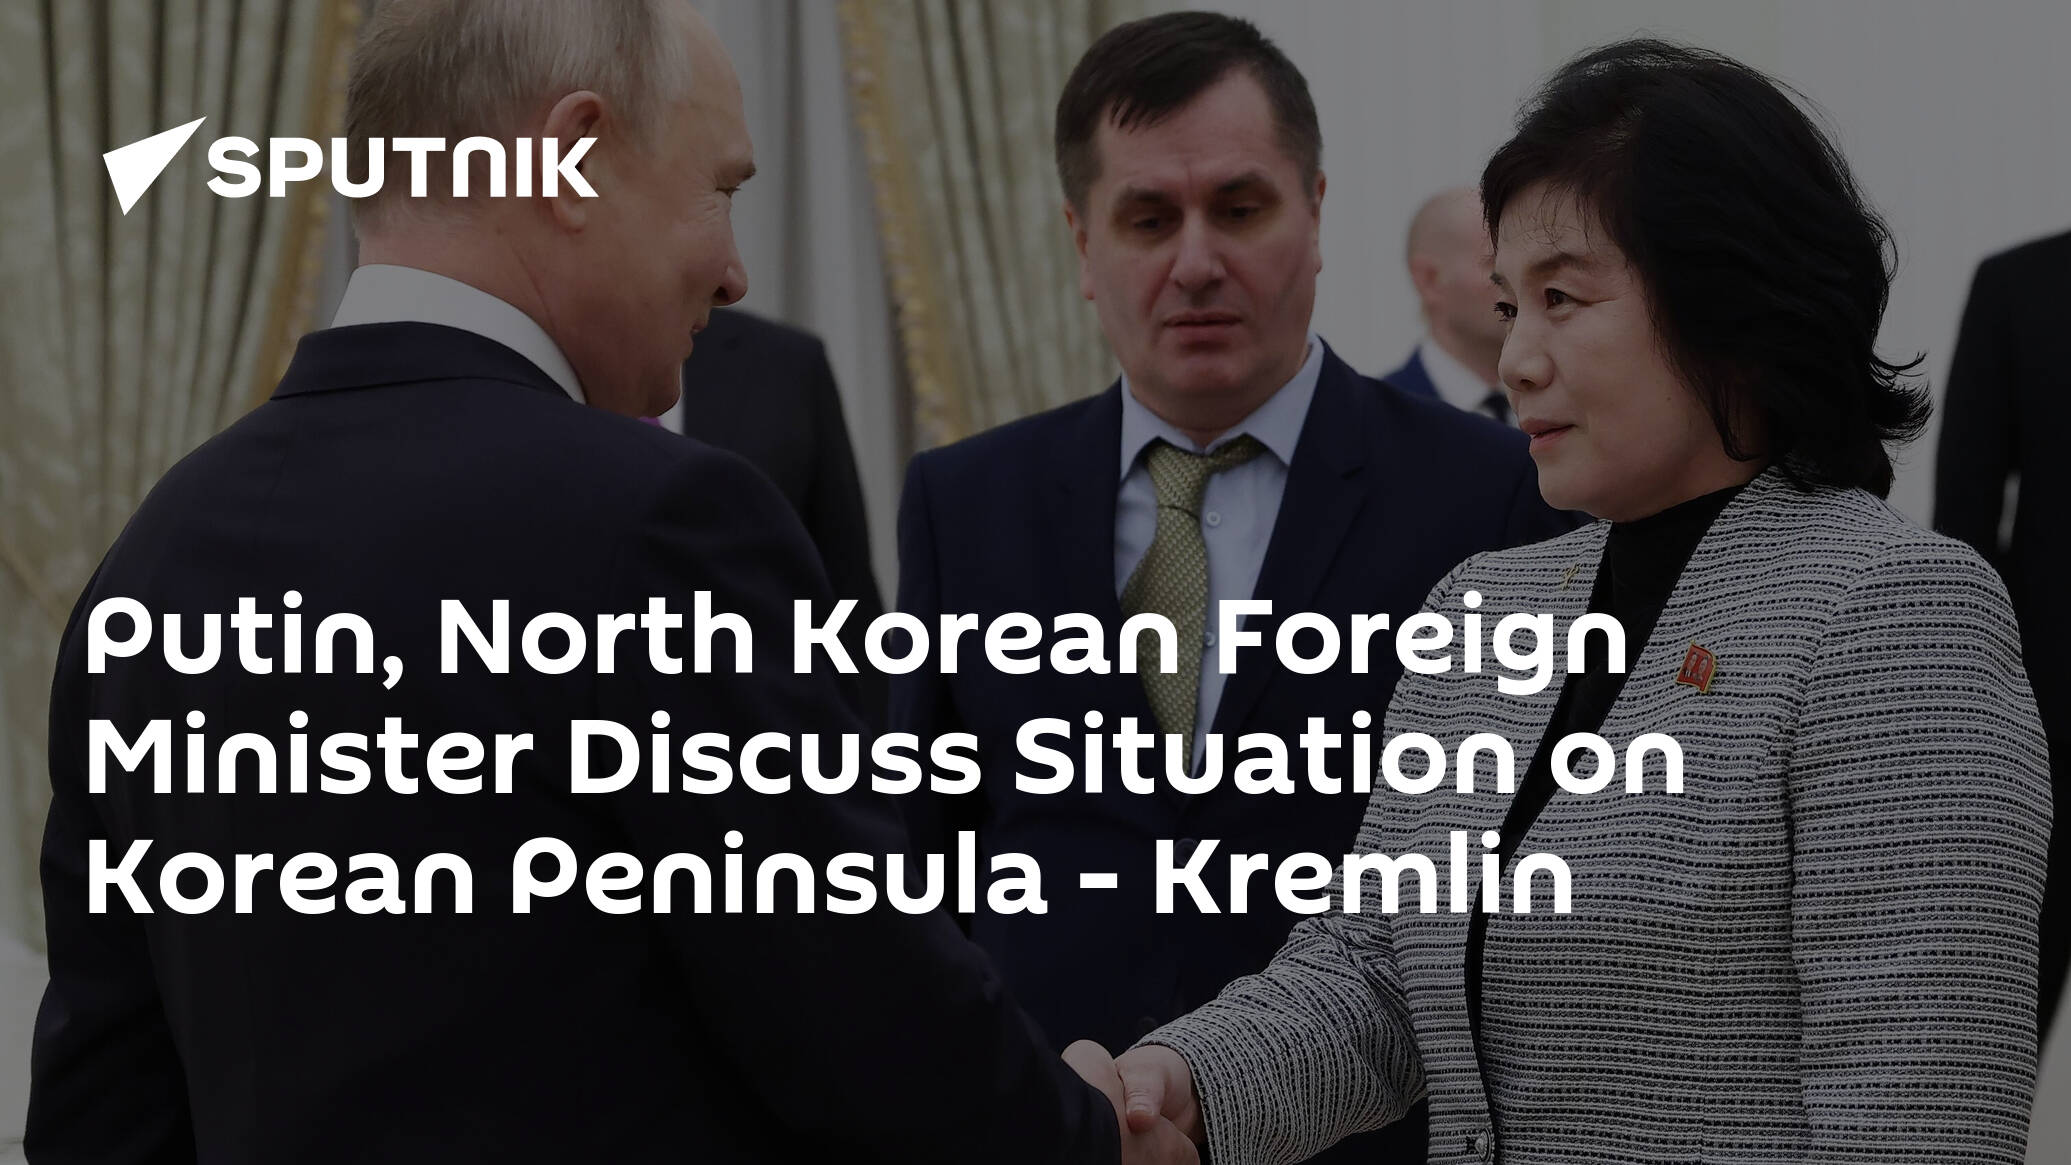 Putin, North Korean Foreign Minister Discuss Situation on Korean Peninsula – Kremlin